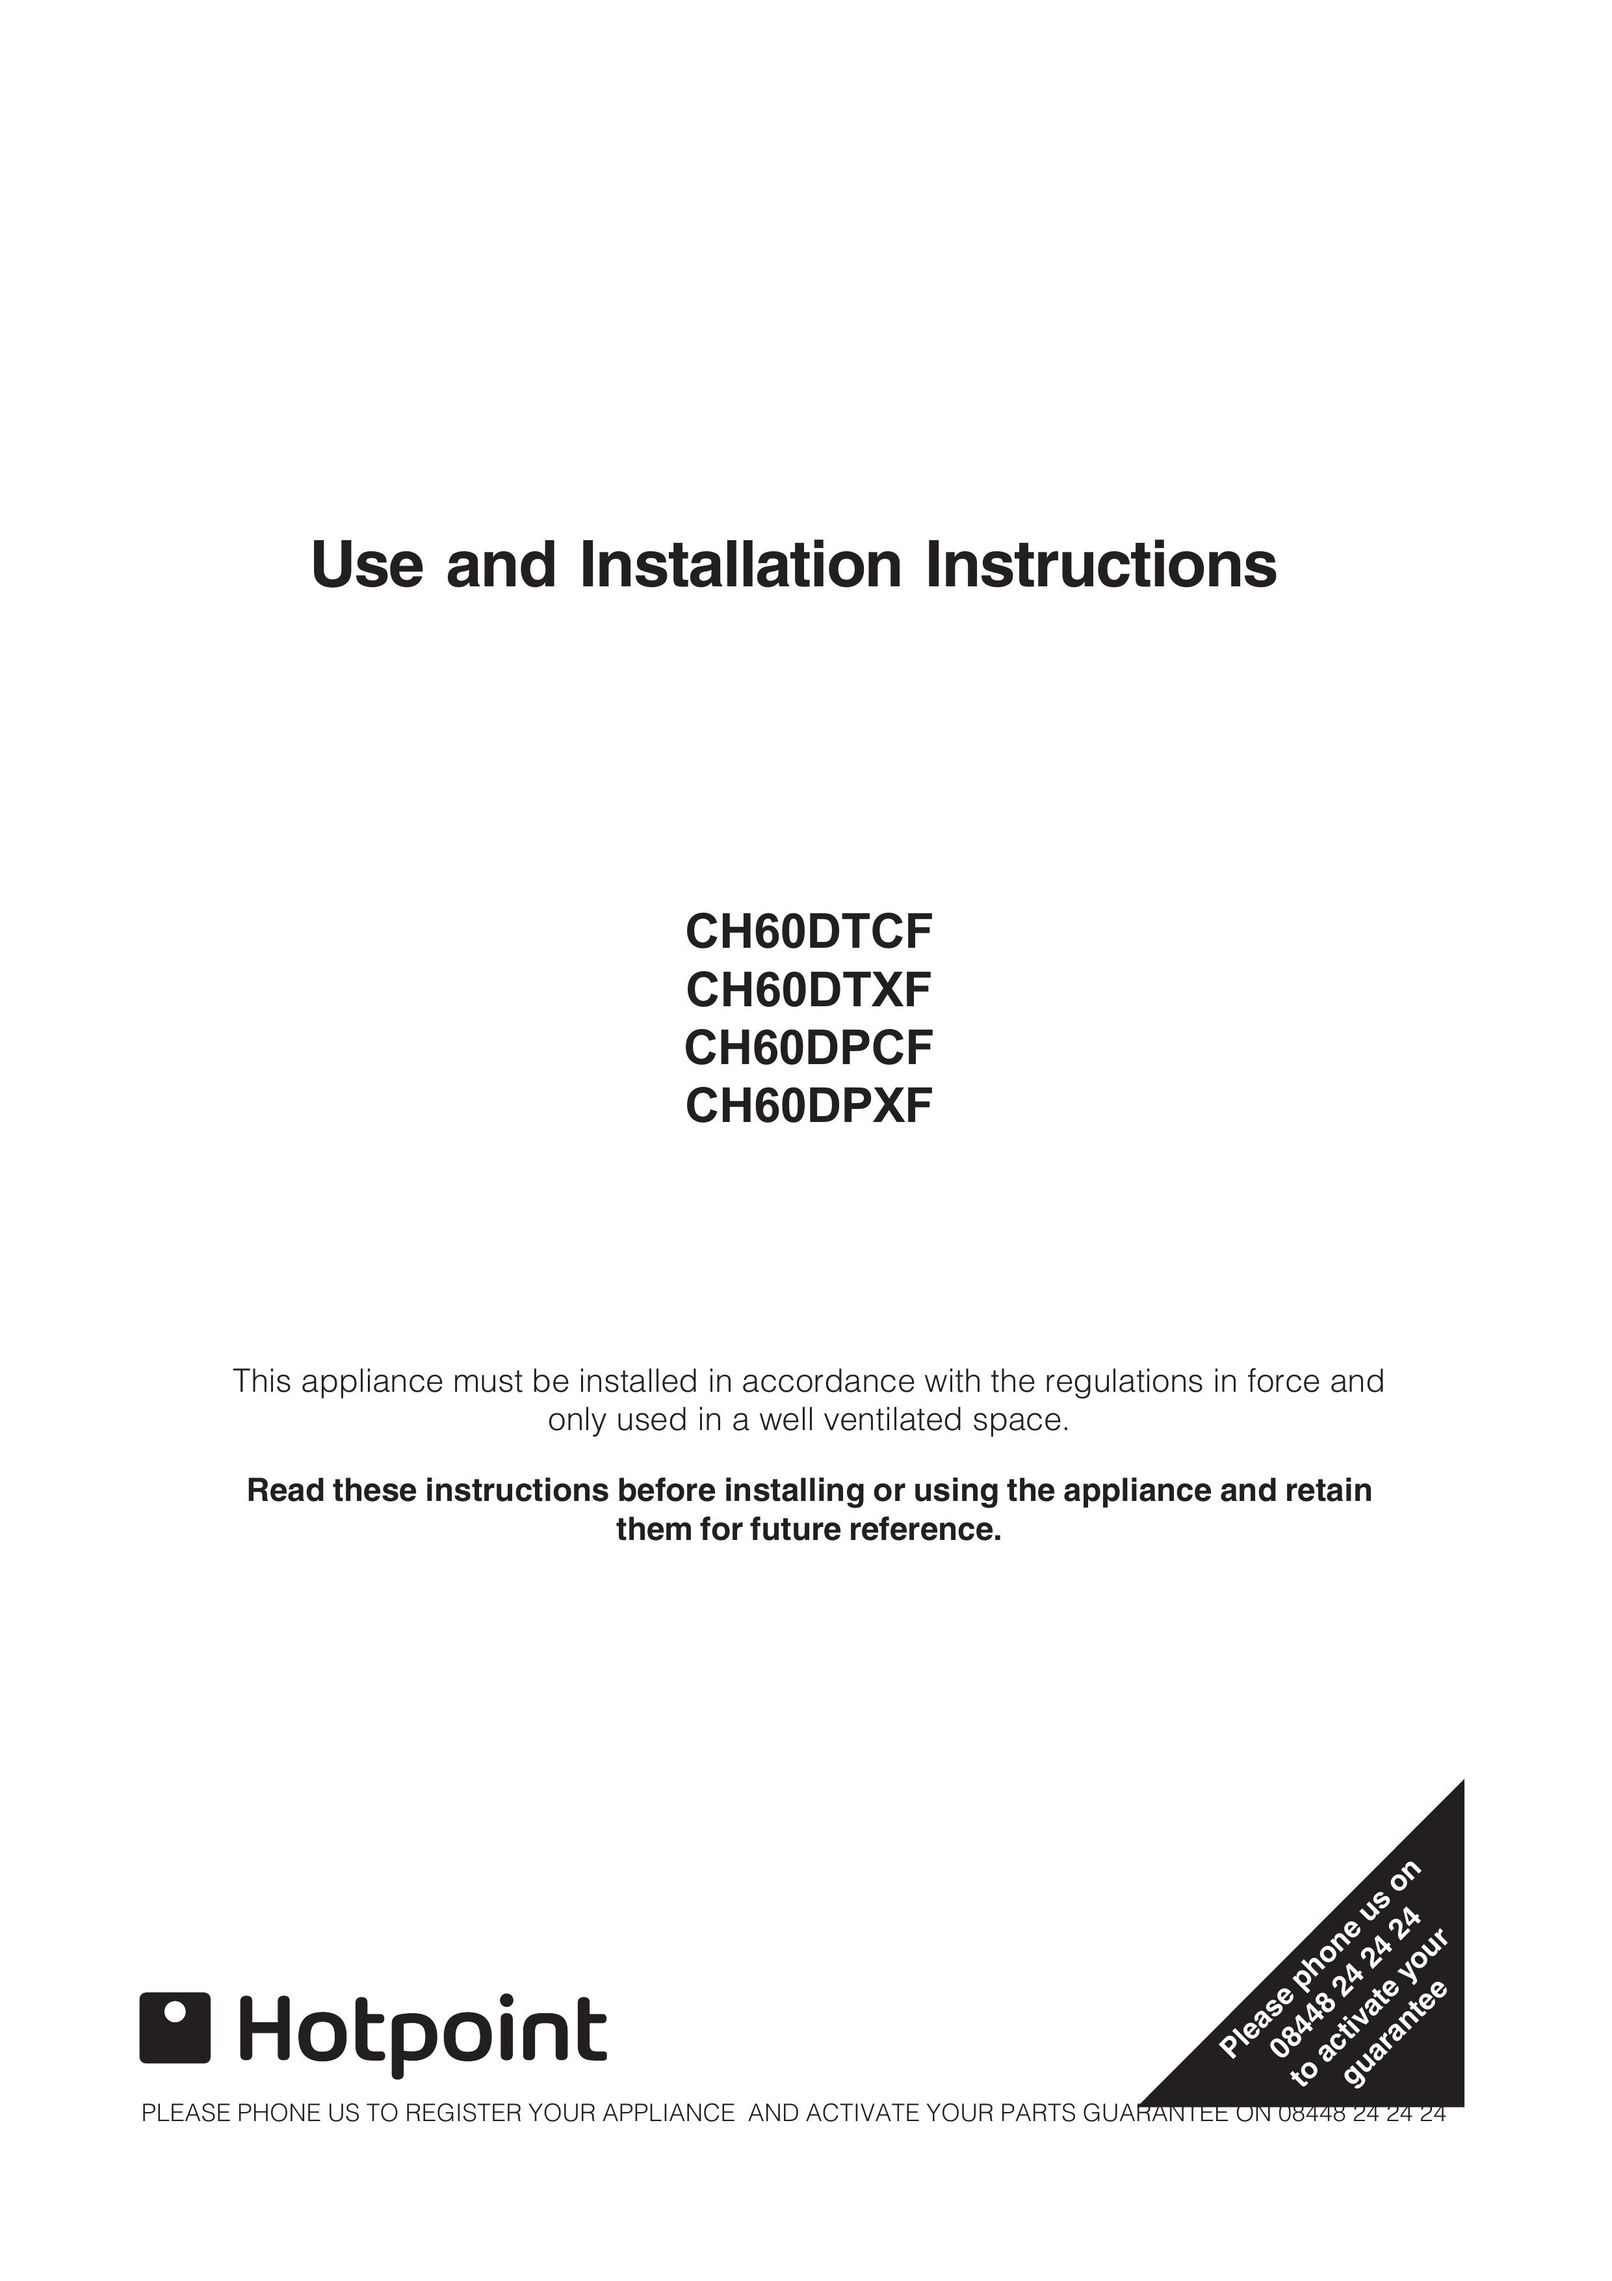 Xerox CH60DPCF Oven User Manual